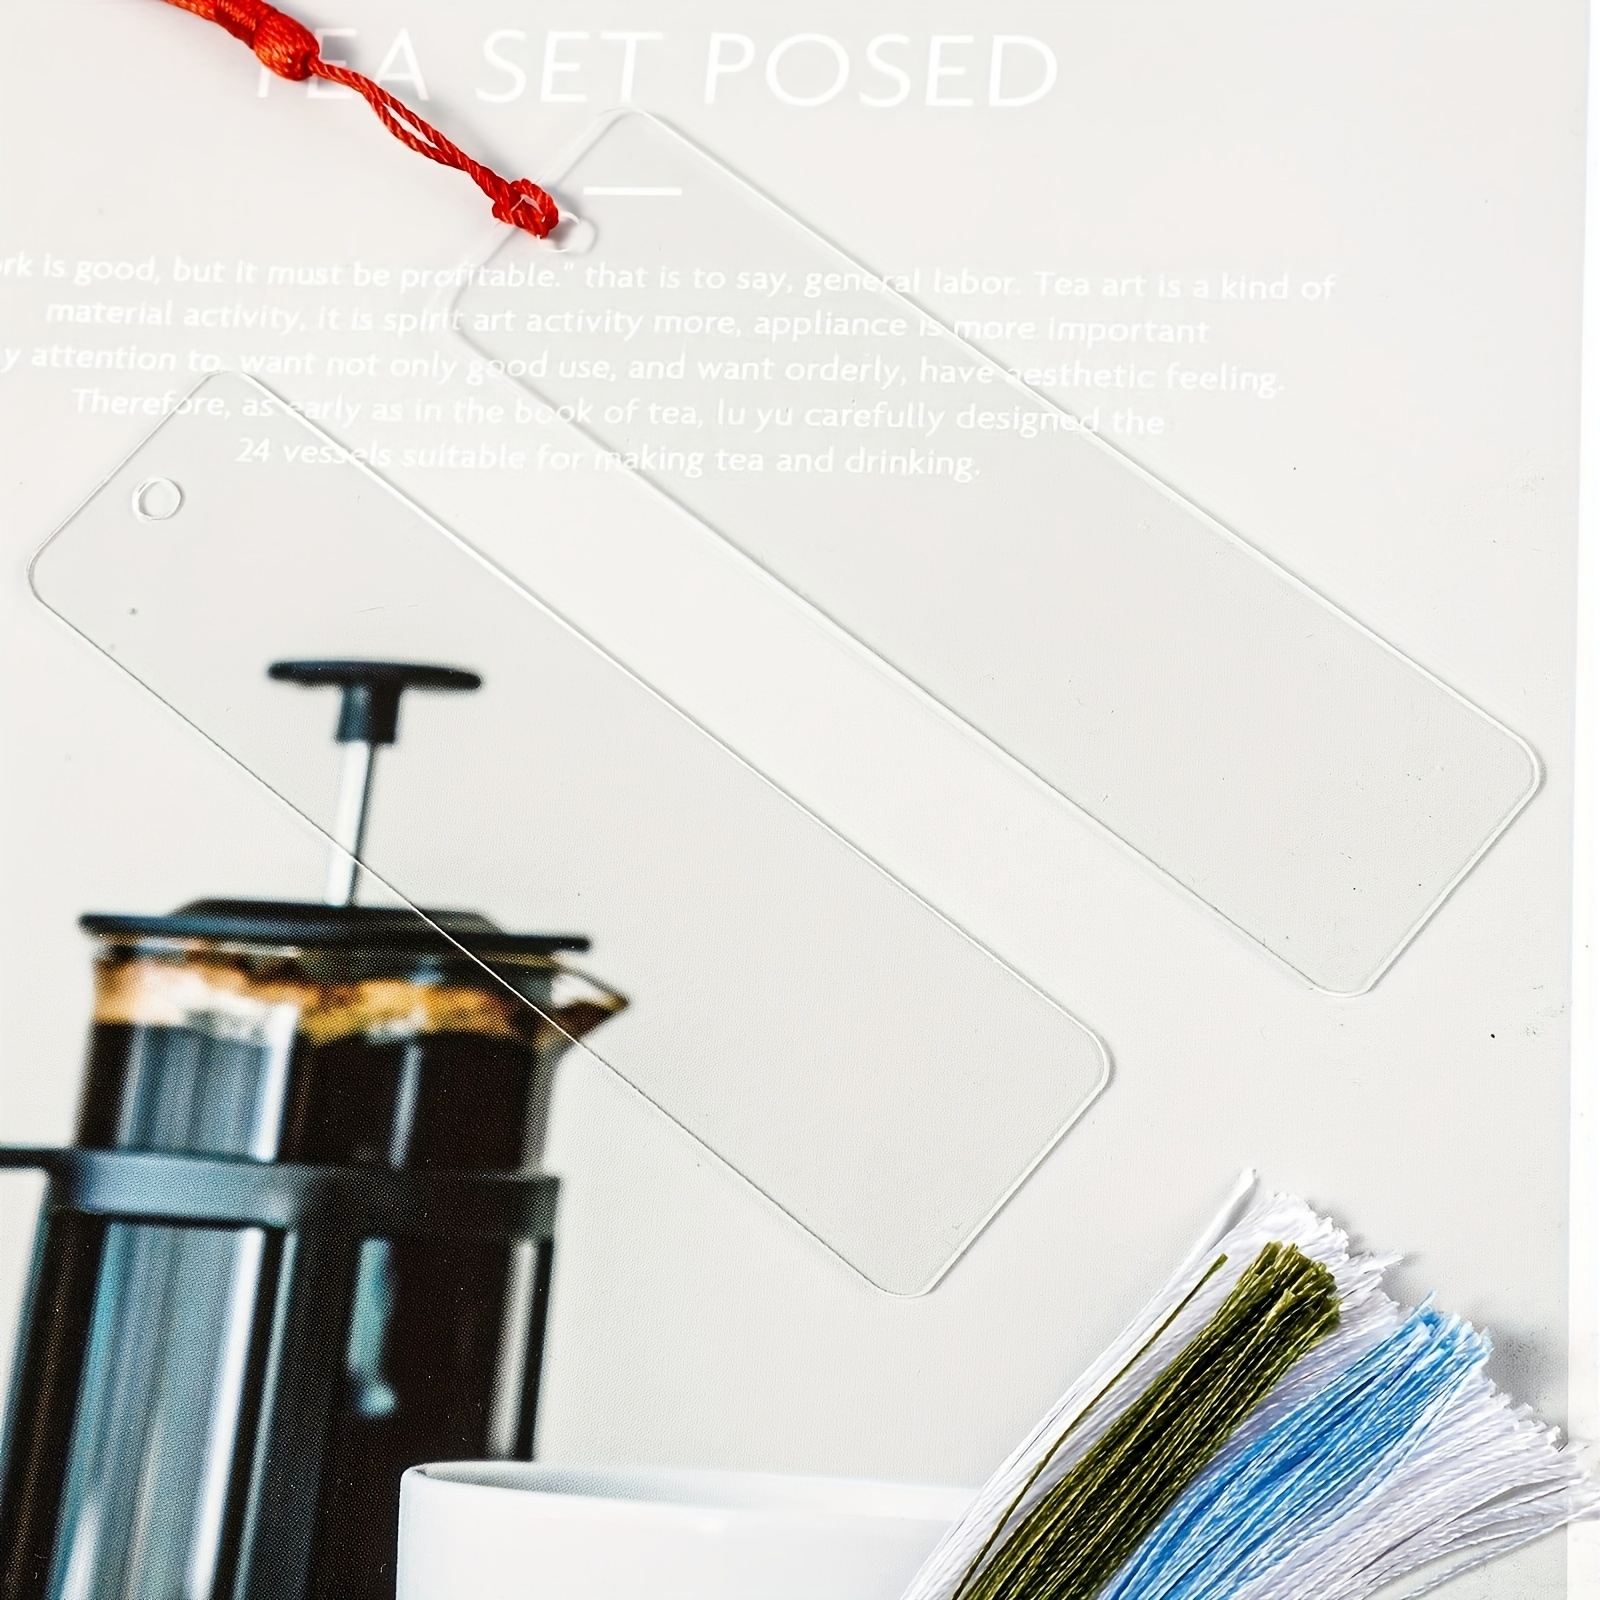 30 Pcs Blank Acrylic Bookmark Clear Bookmarks With Hole DIY Blank